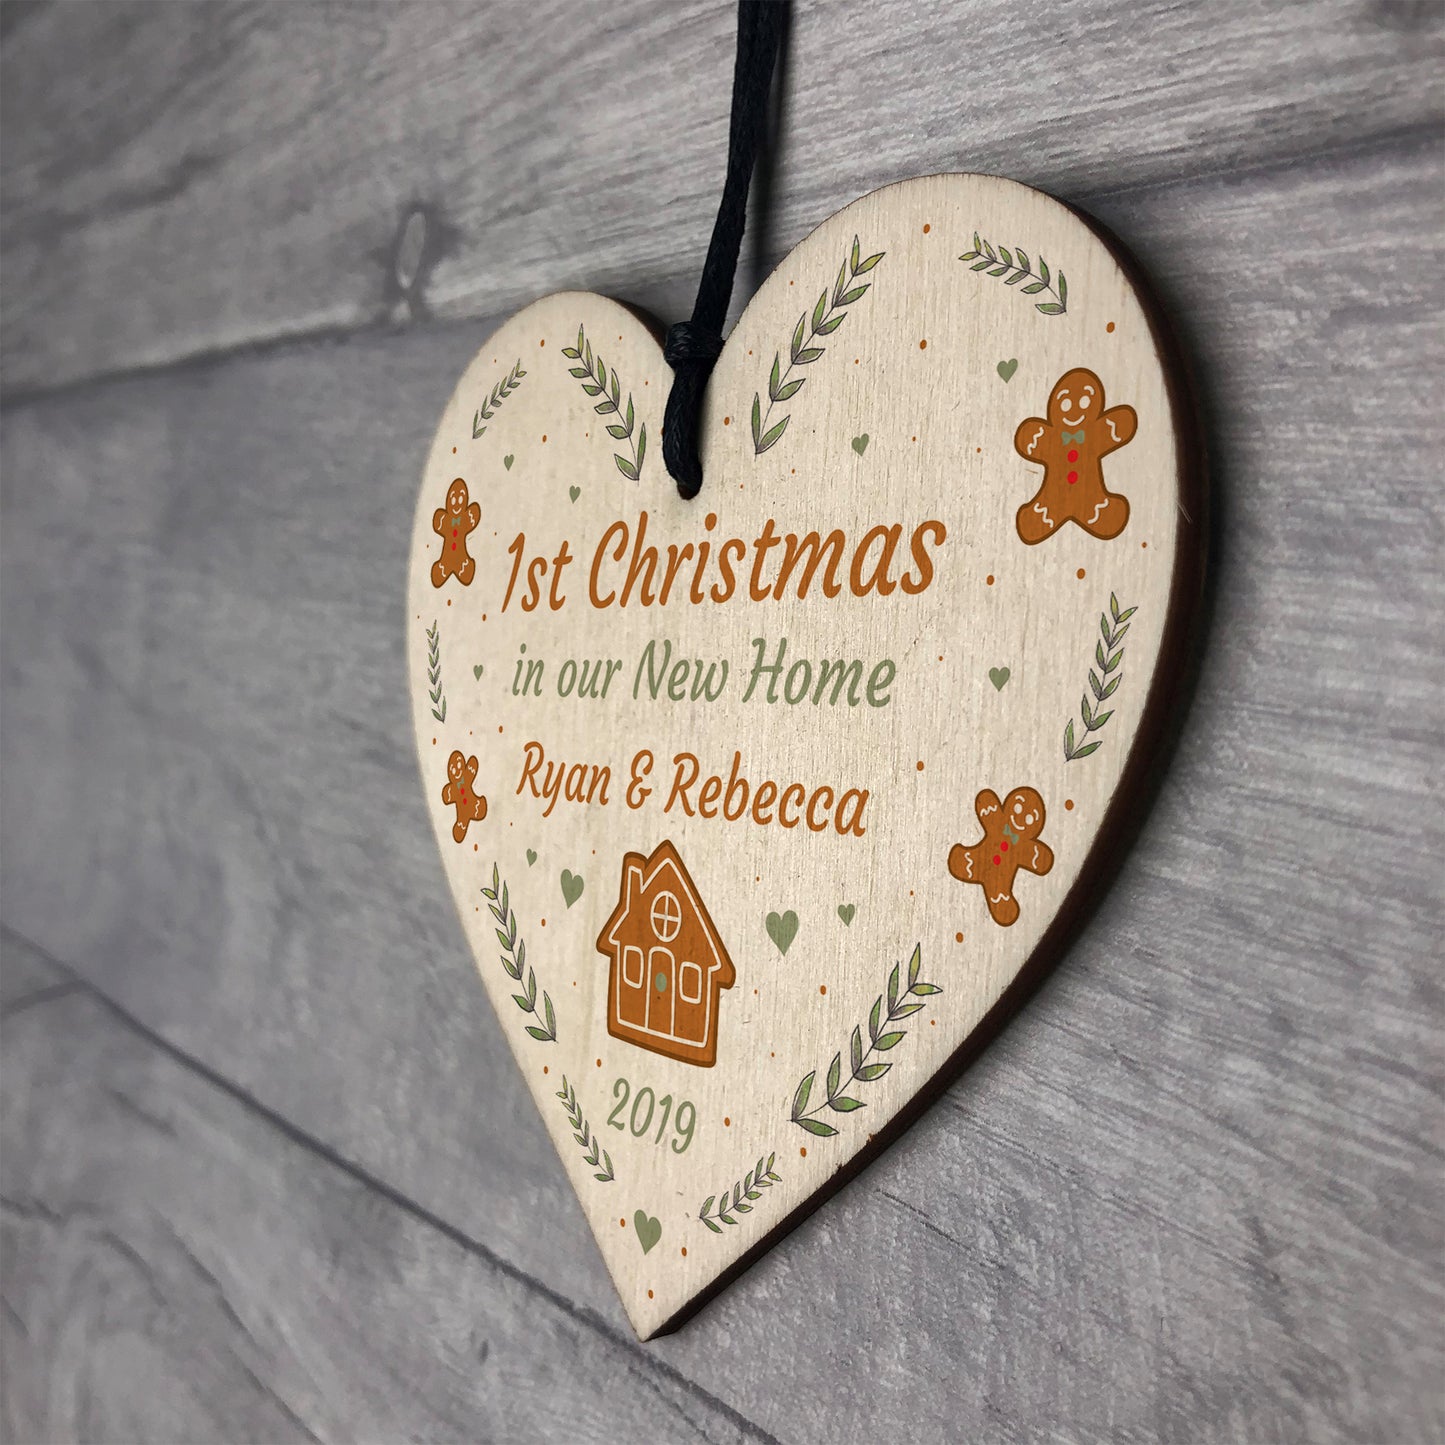 Handmade Christmas Tree Decoration Hanging Heart New Home Gift